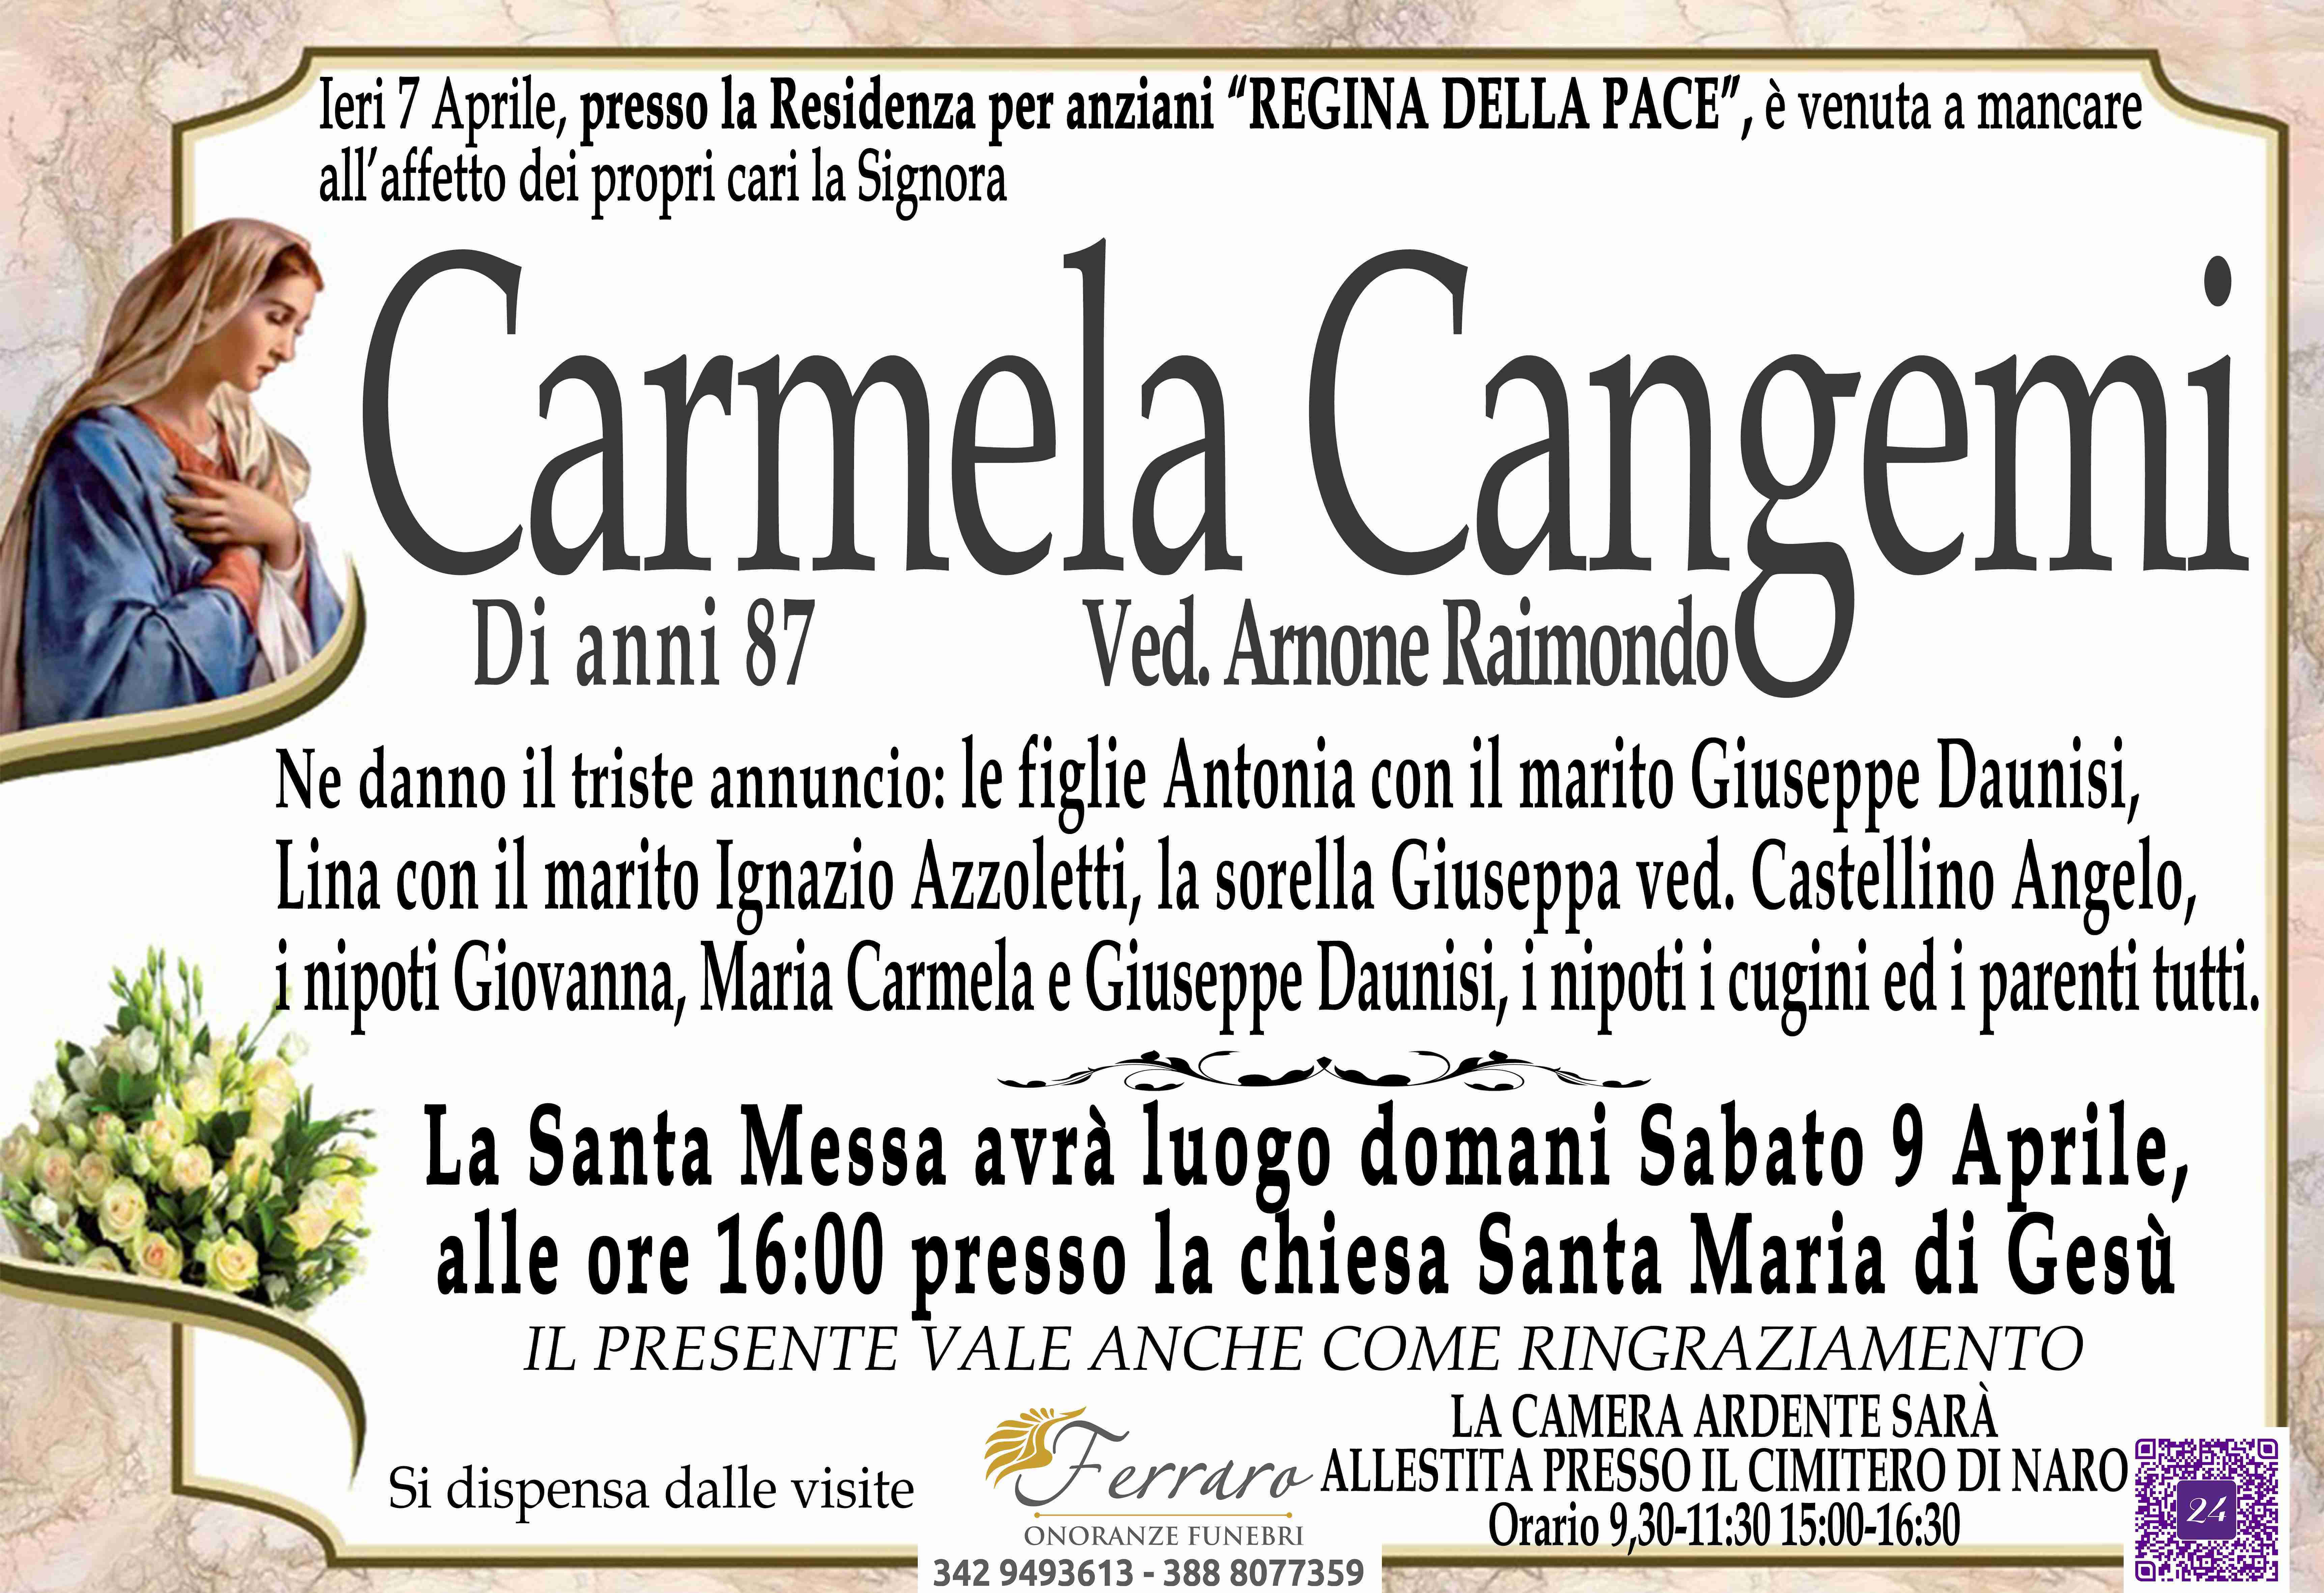 Carmela Cangemi